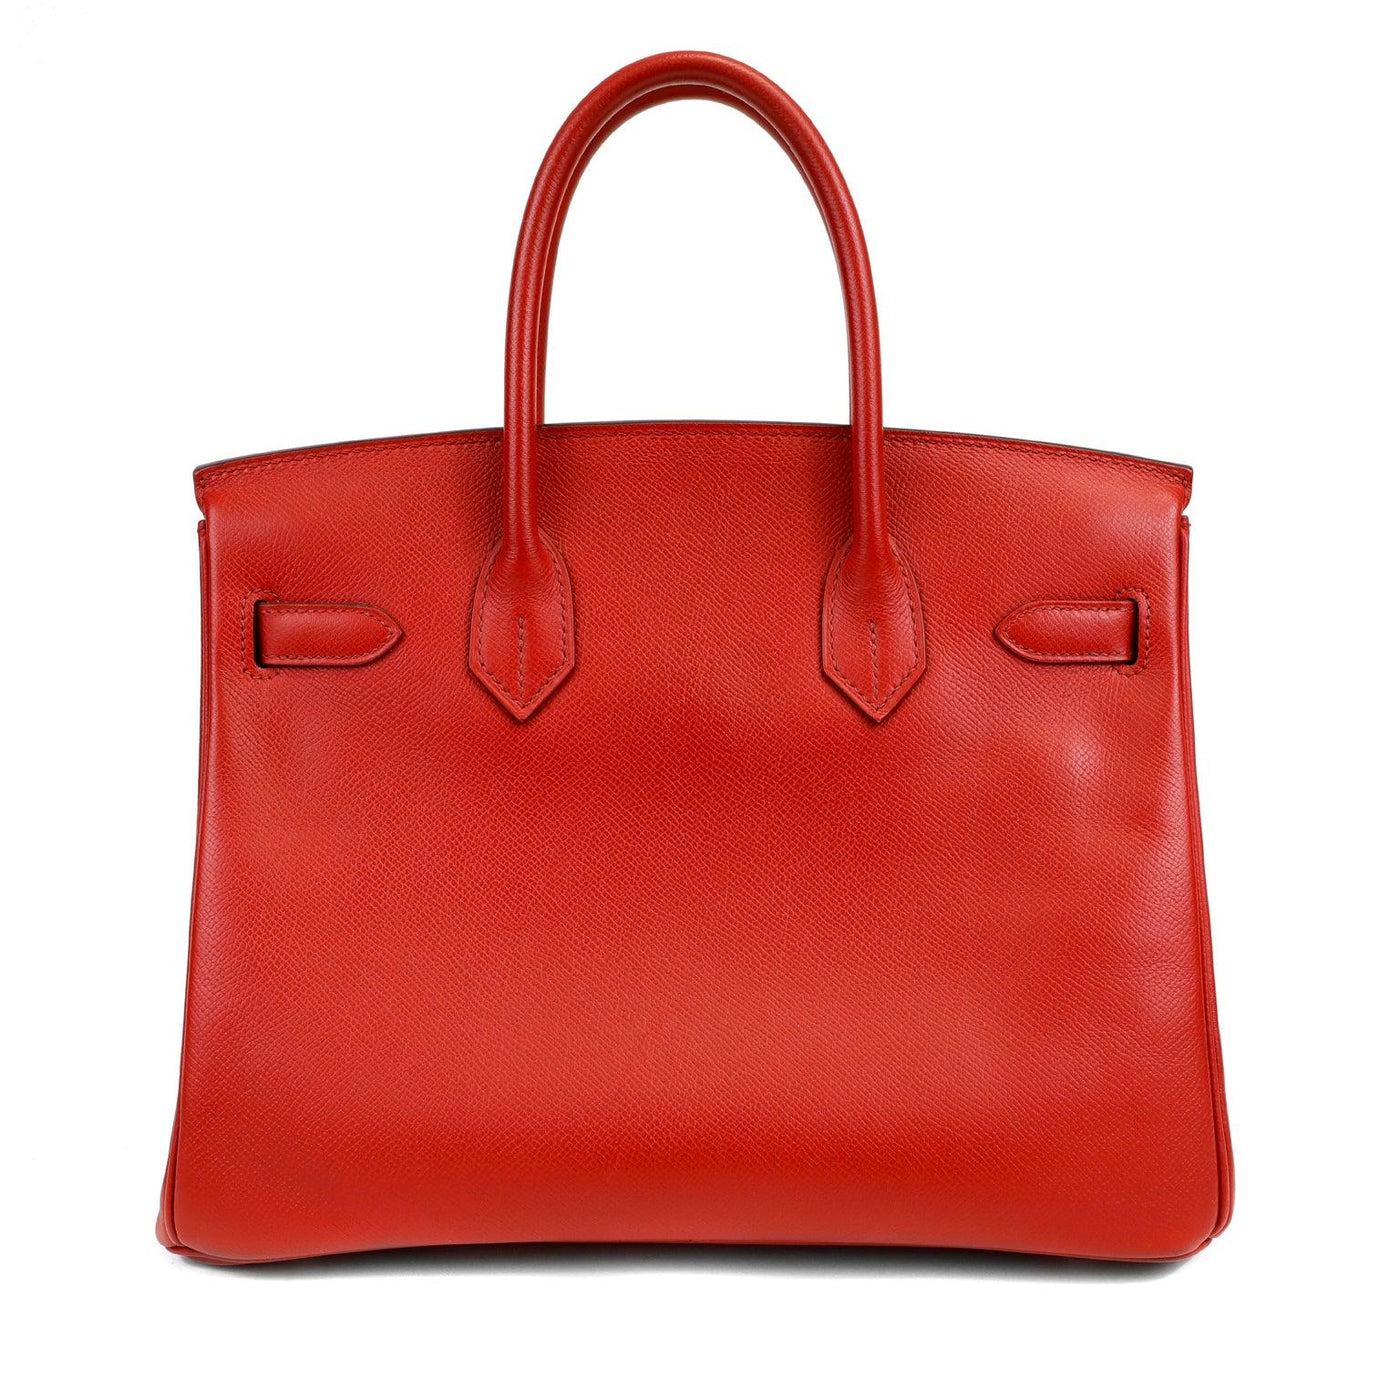 Hermès 30cm Vivid Red Epsom Leather Birkin - Only Authentics